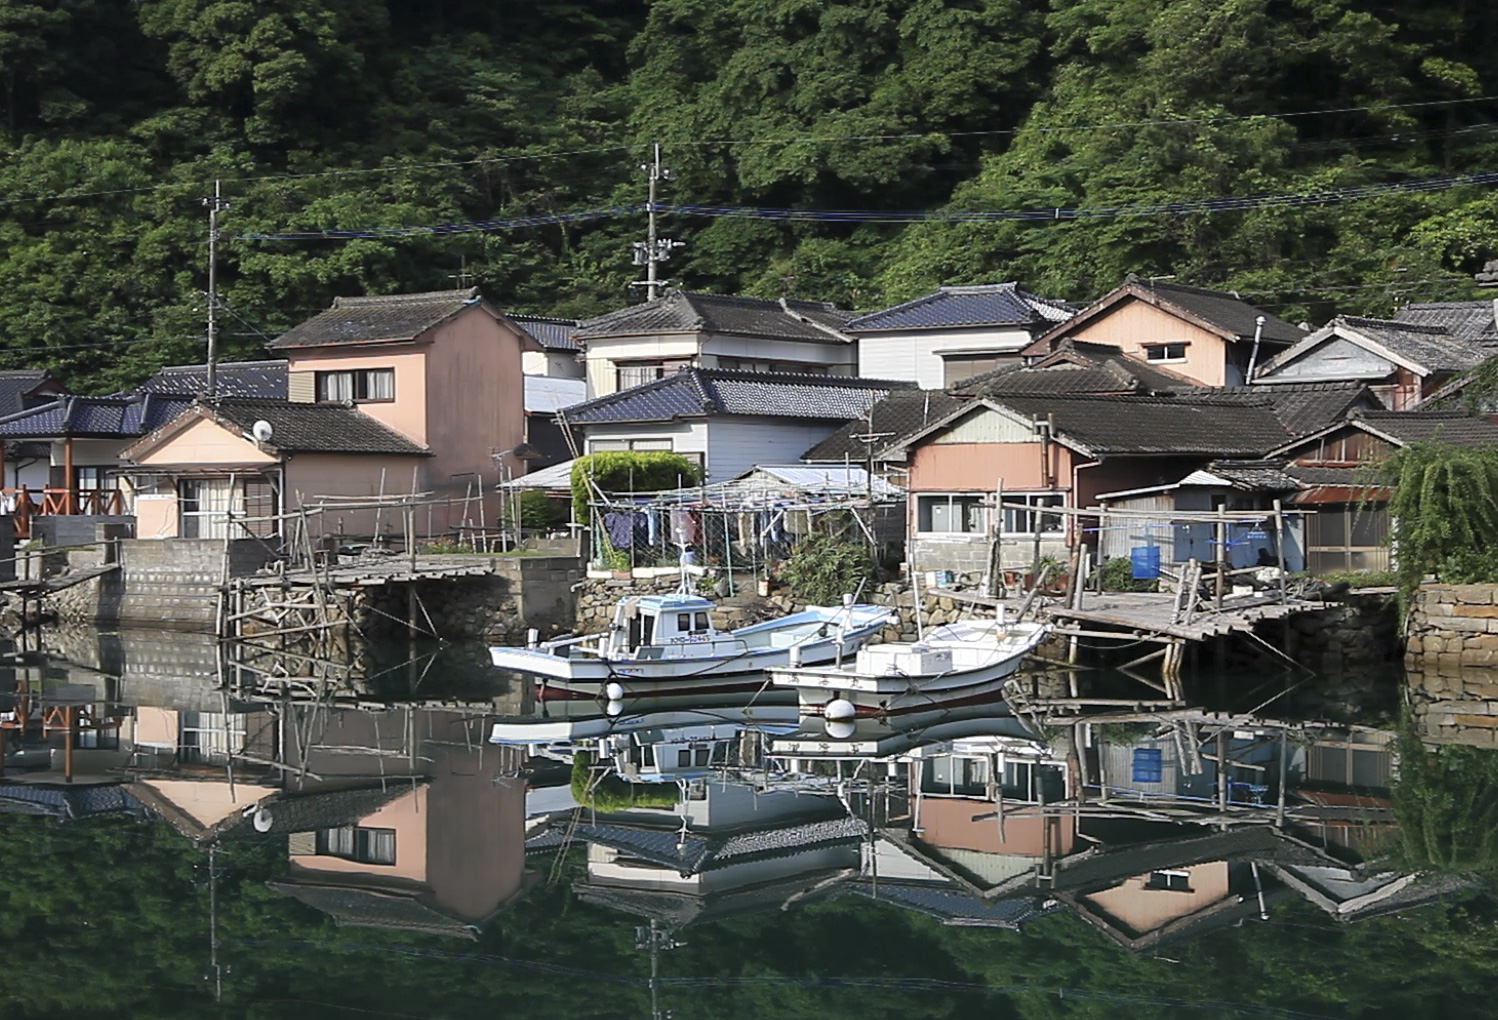 A view of the Sakitsu community